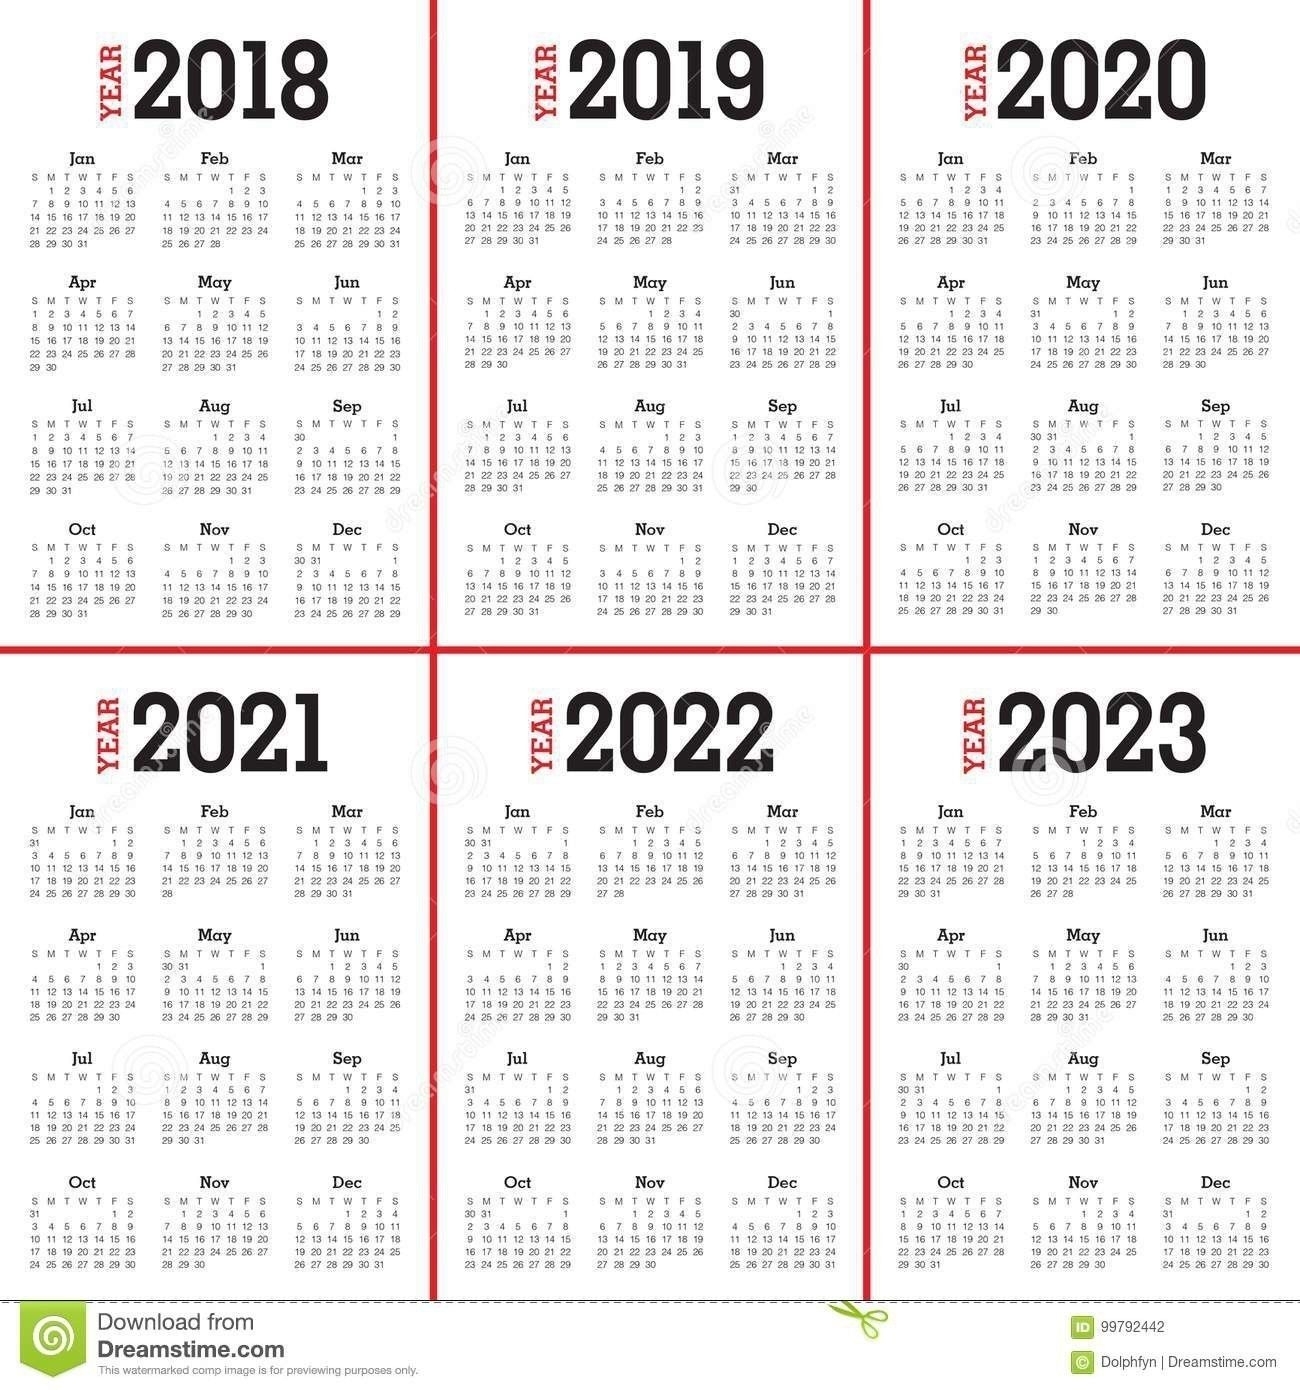 Take Calendar For 2021 2022 2023